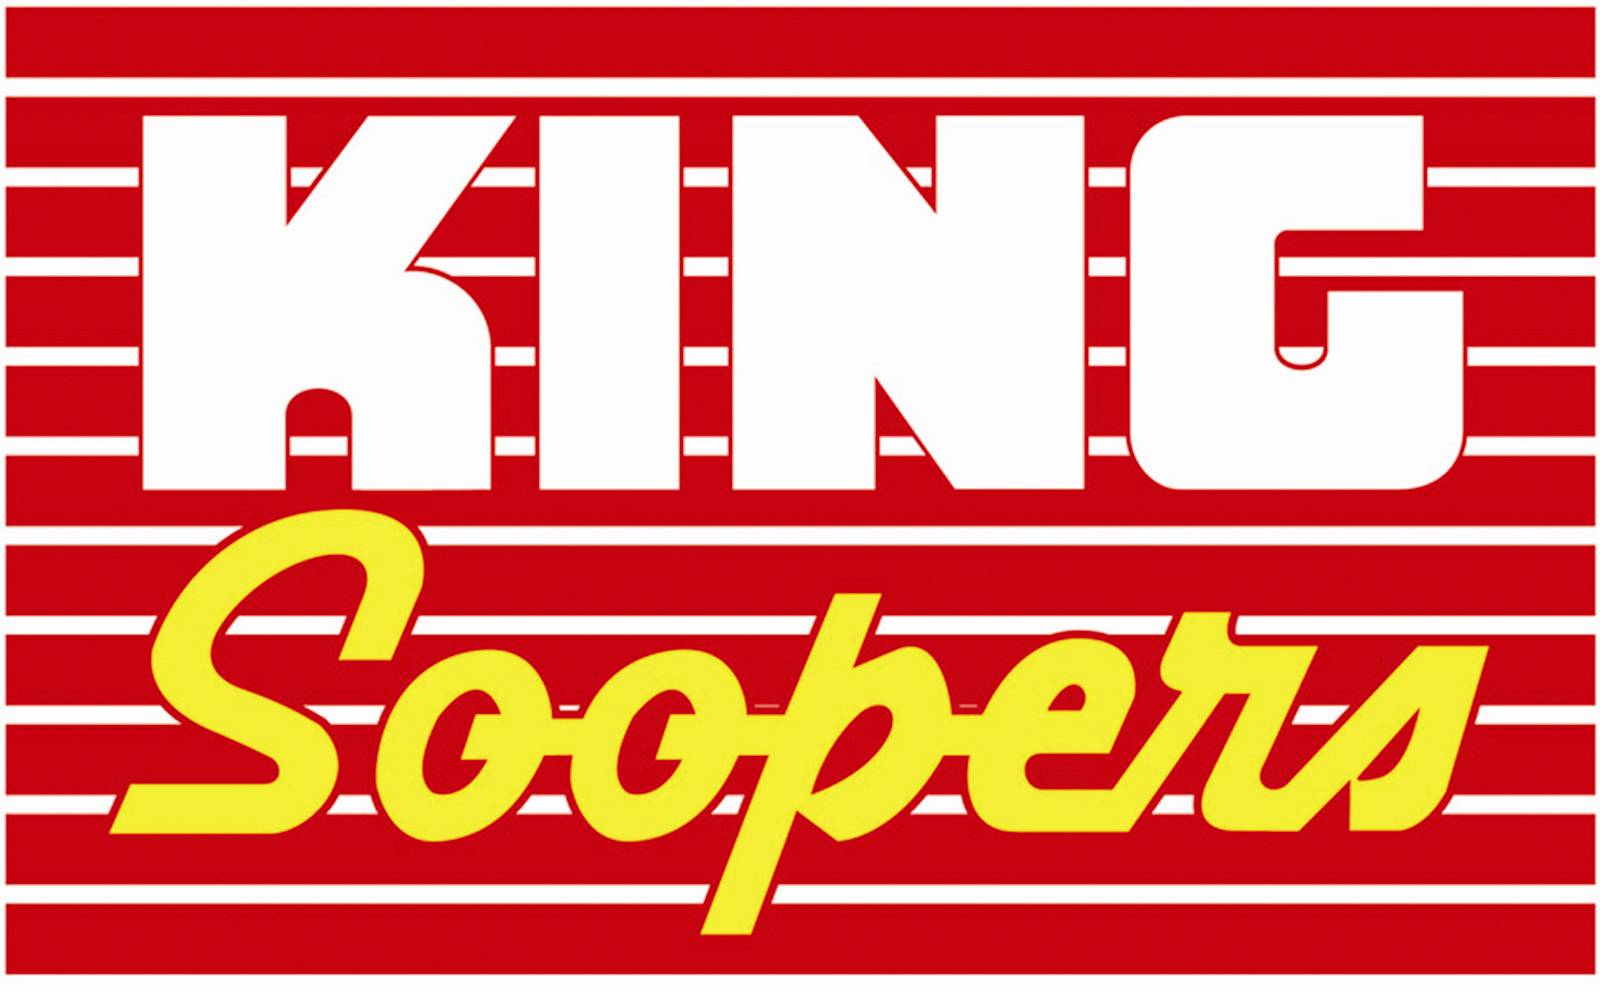 King-Soopers-logo